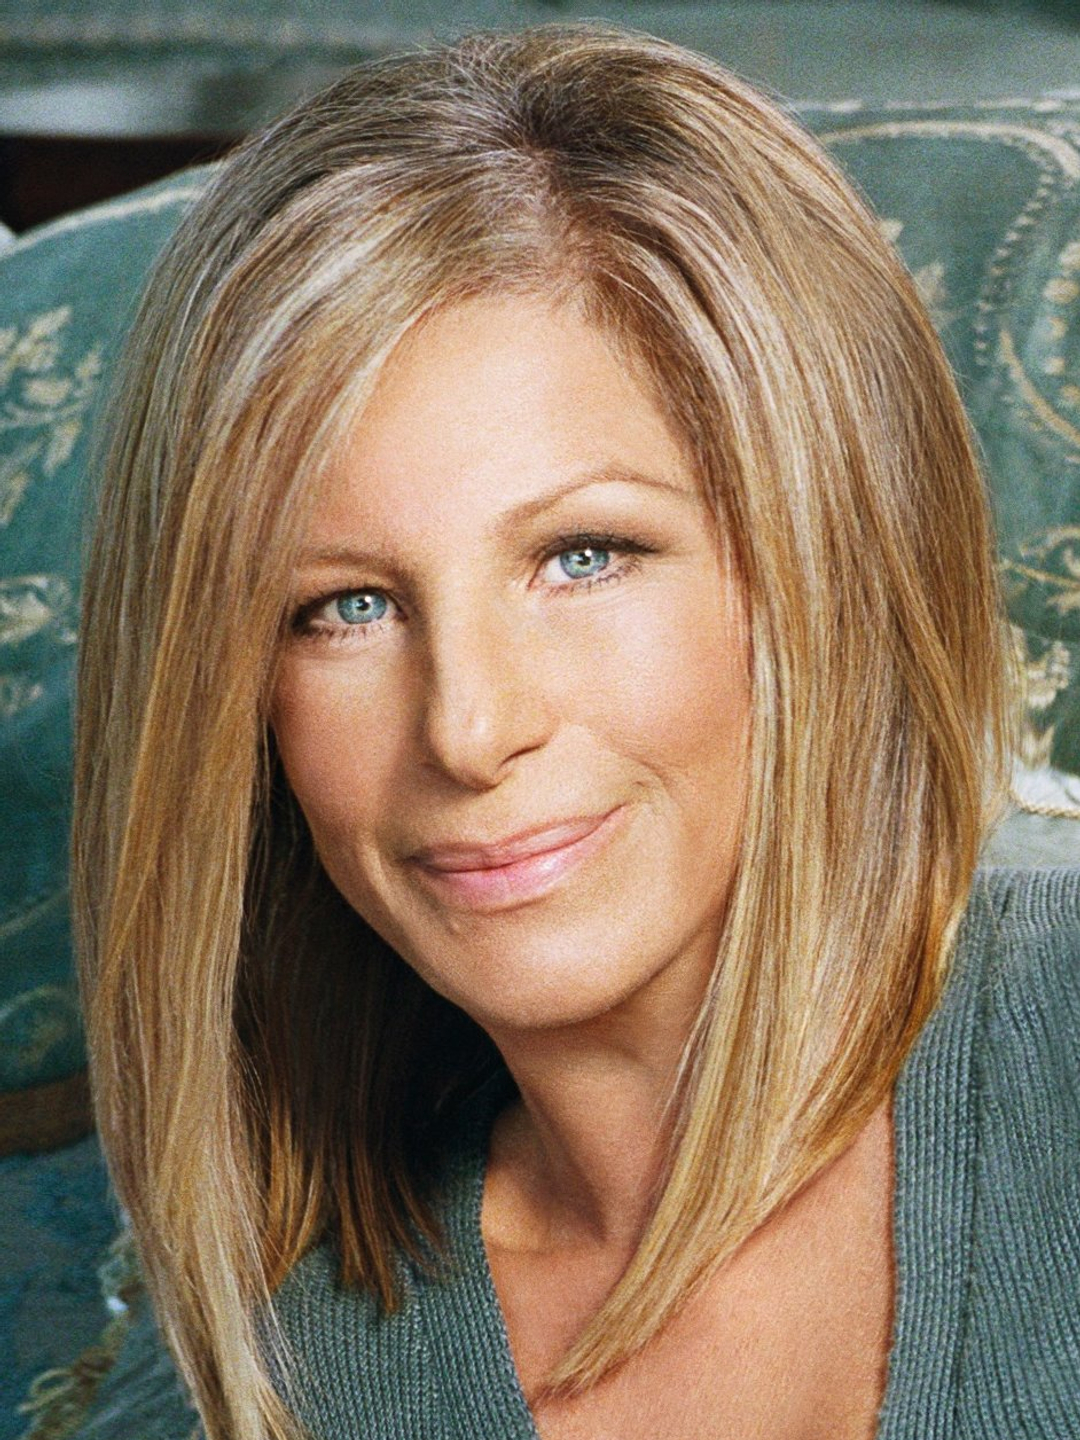 Barbra Streisand personal life